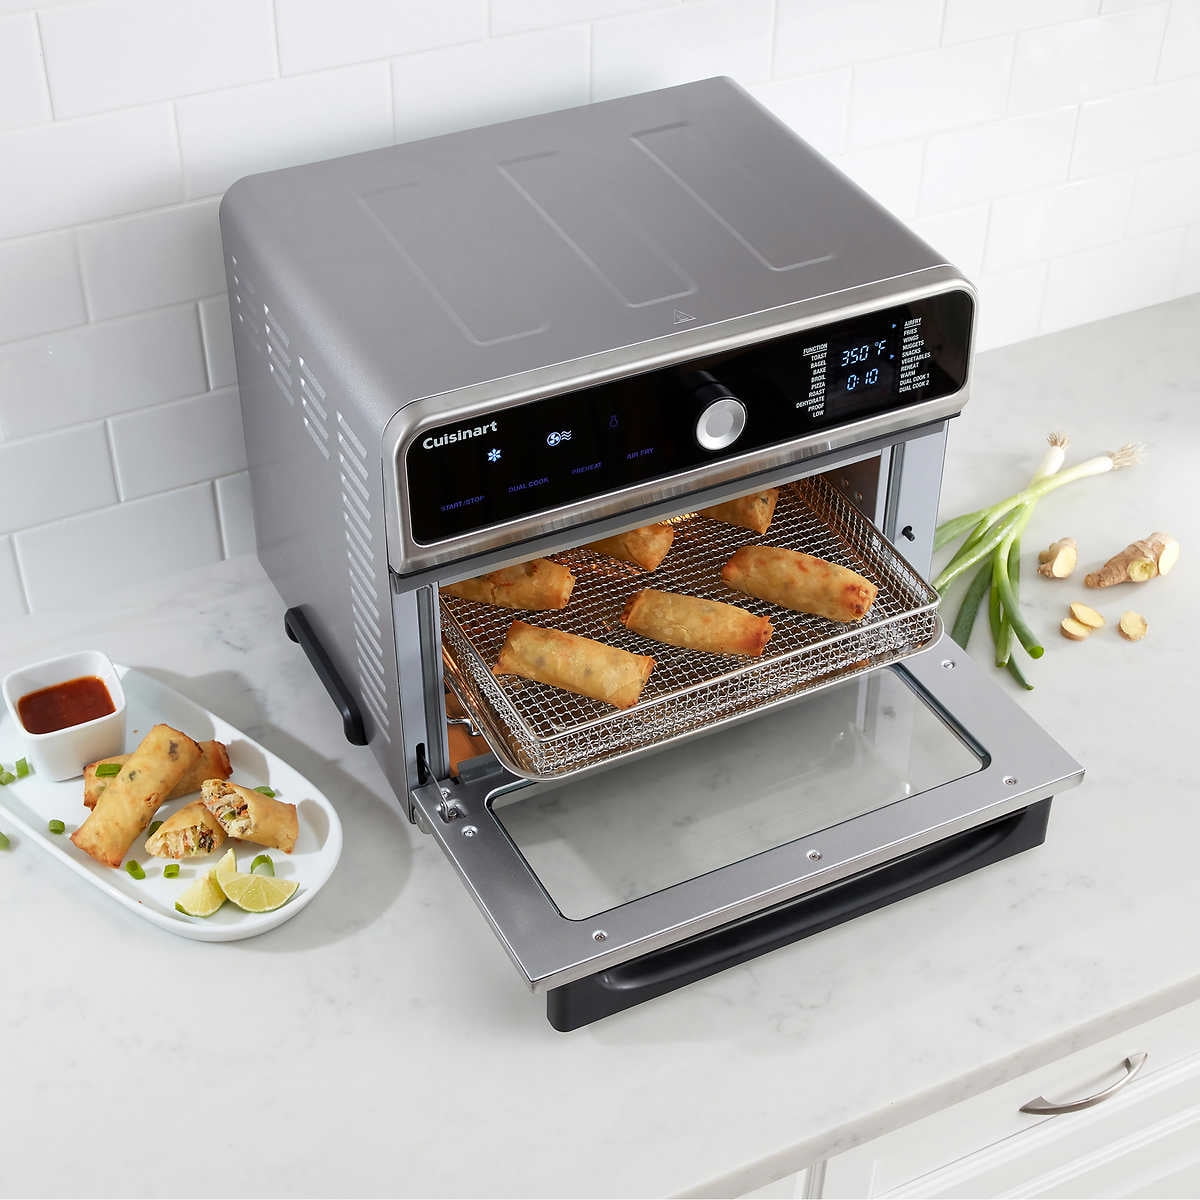 Rent to Own Cuisinart Cuisinart Slow Cooker & Digital Toaster Oven